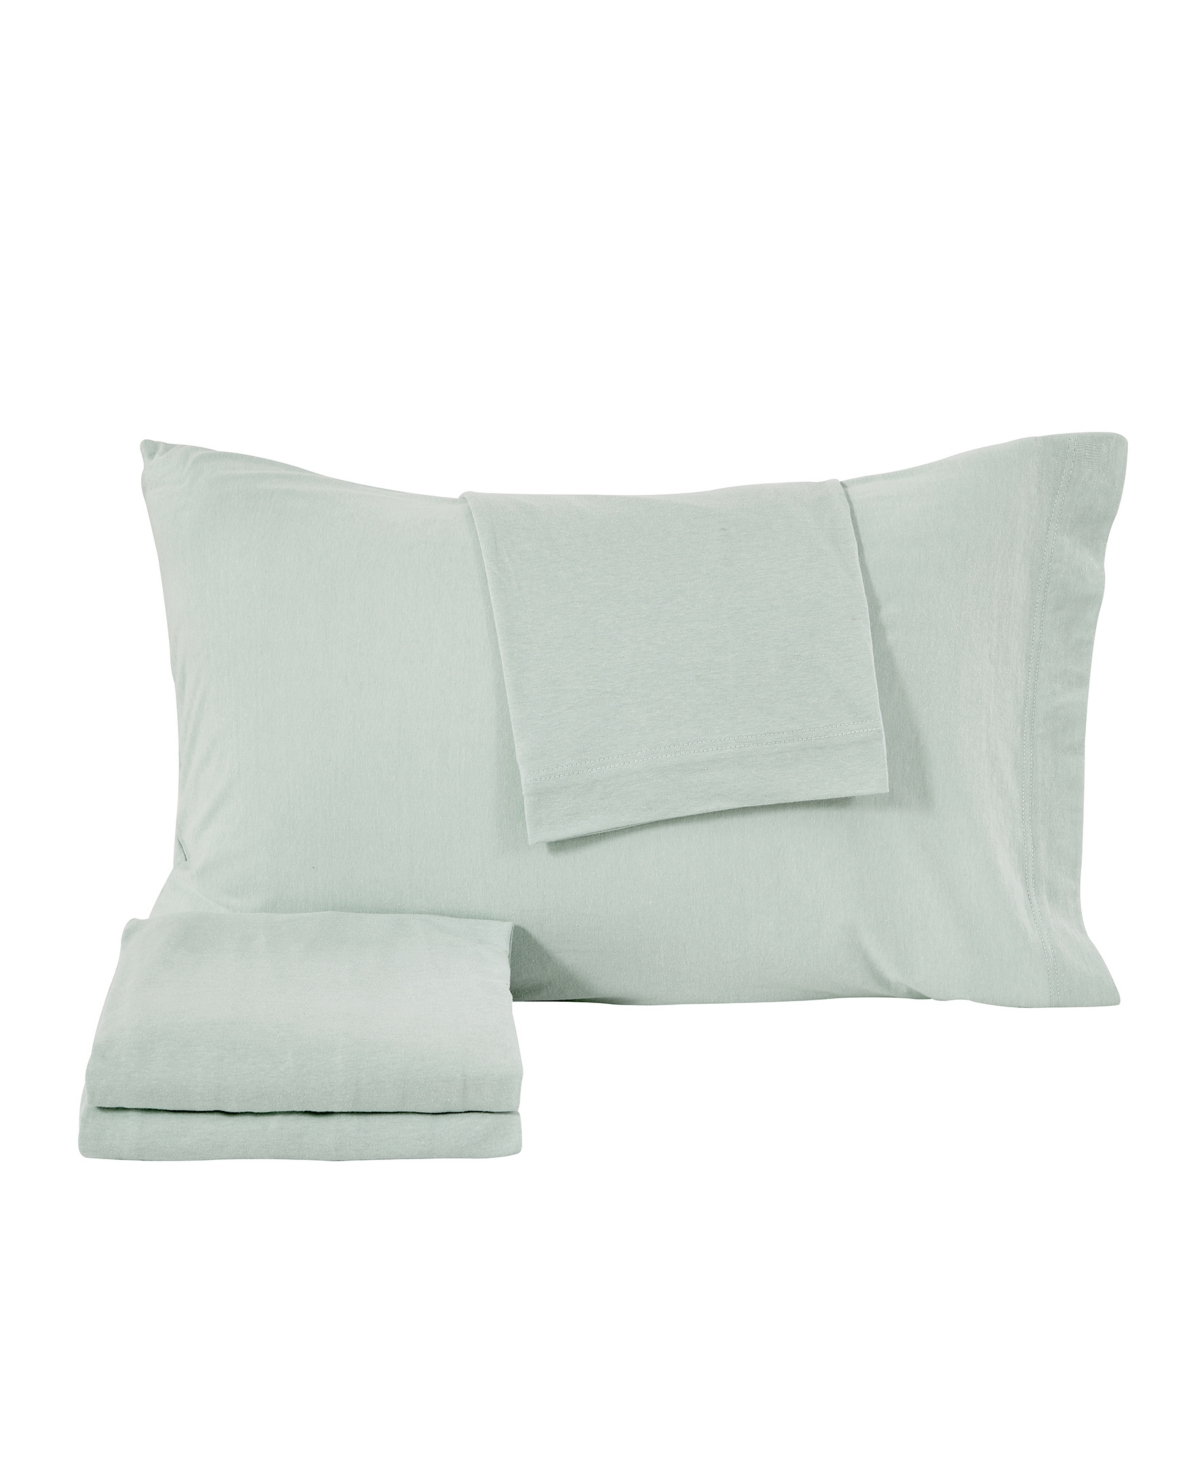 Premium Comforts Heathered Melange T-shirt Jersey Knit Cotton Blend 4 Piece Sheet Set, Full In Heathered Aqua